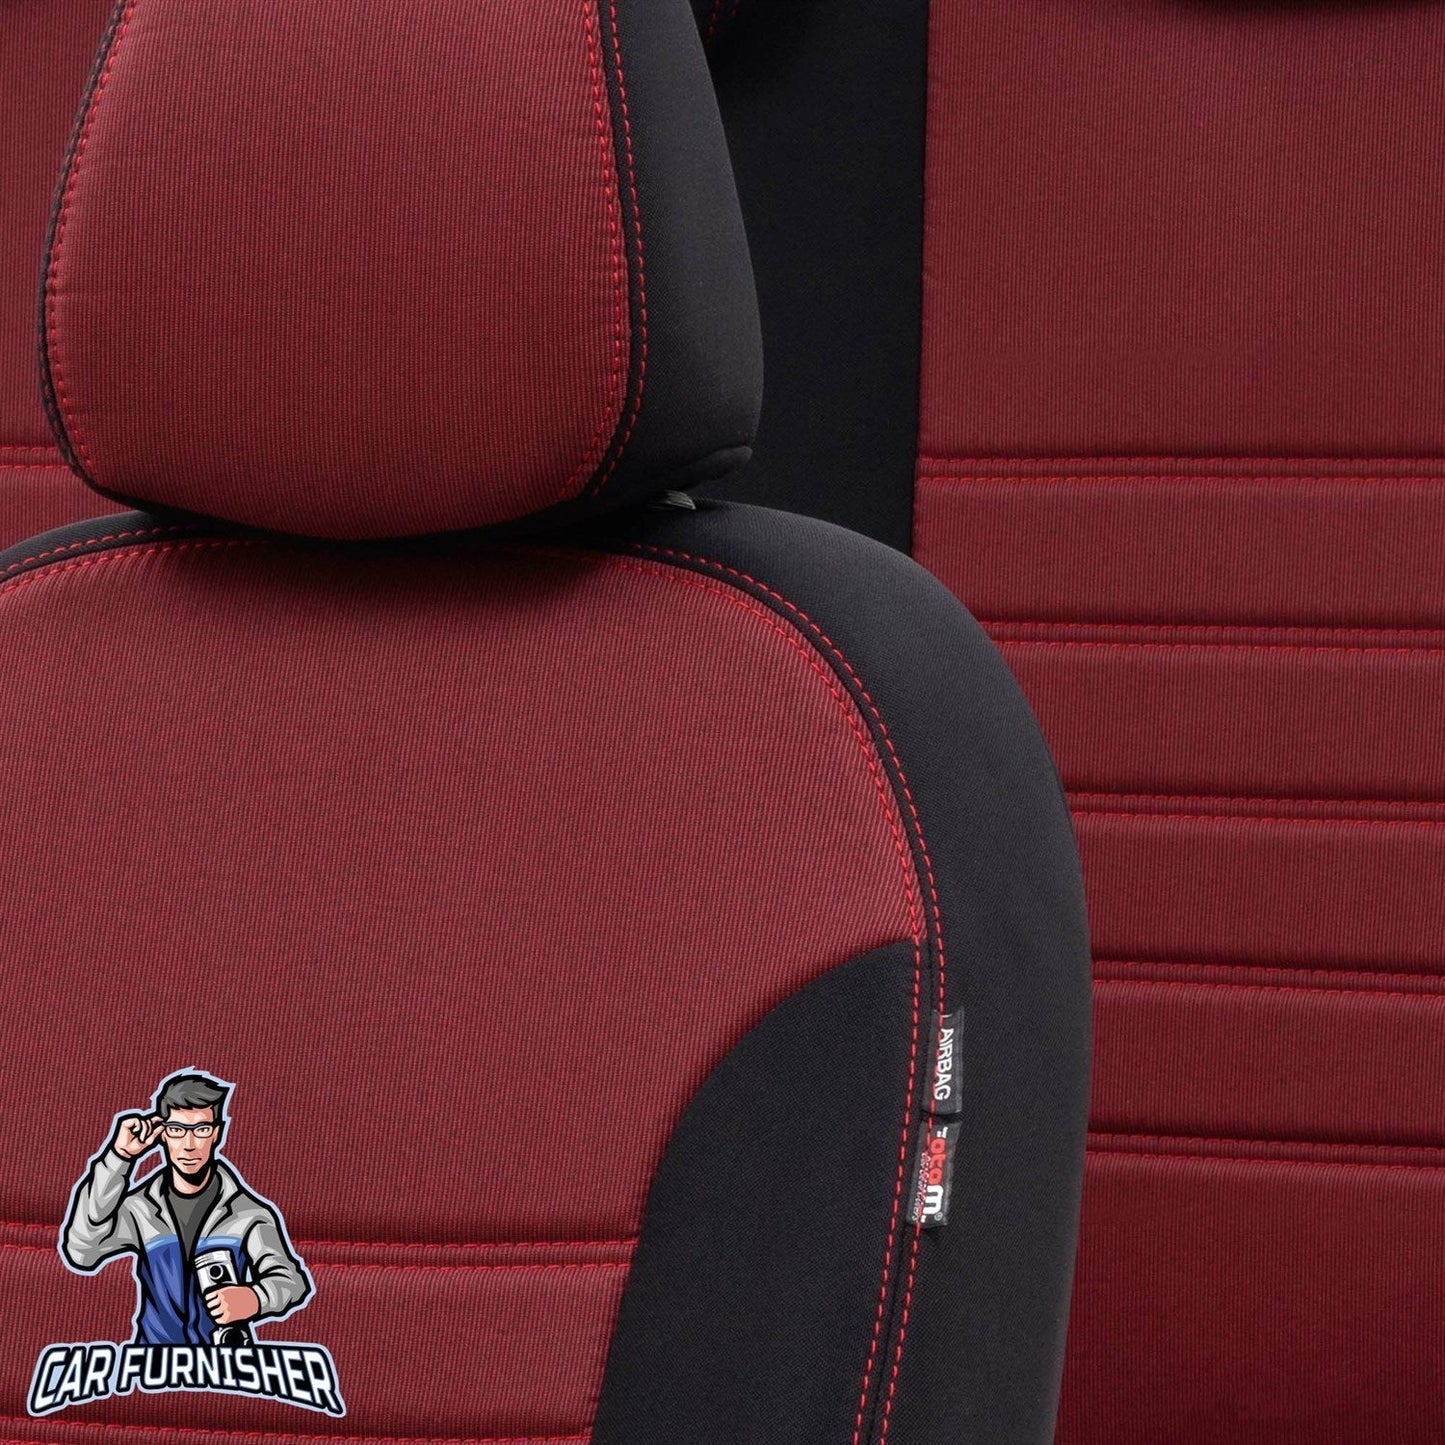 Peugeot 301 Seat Covers Original Jacquard Design Red Jacquard Fabric